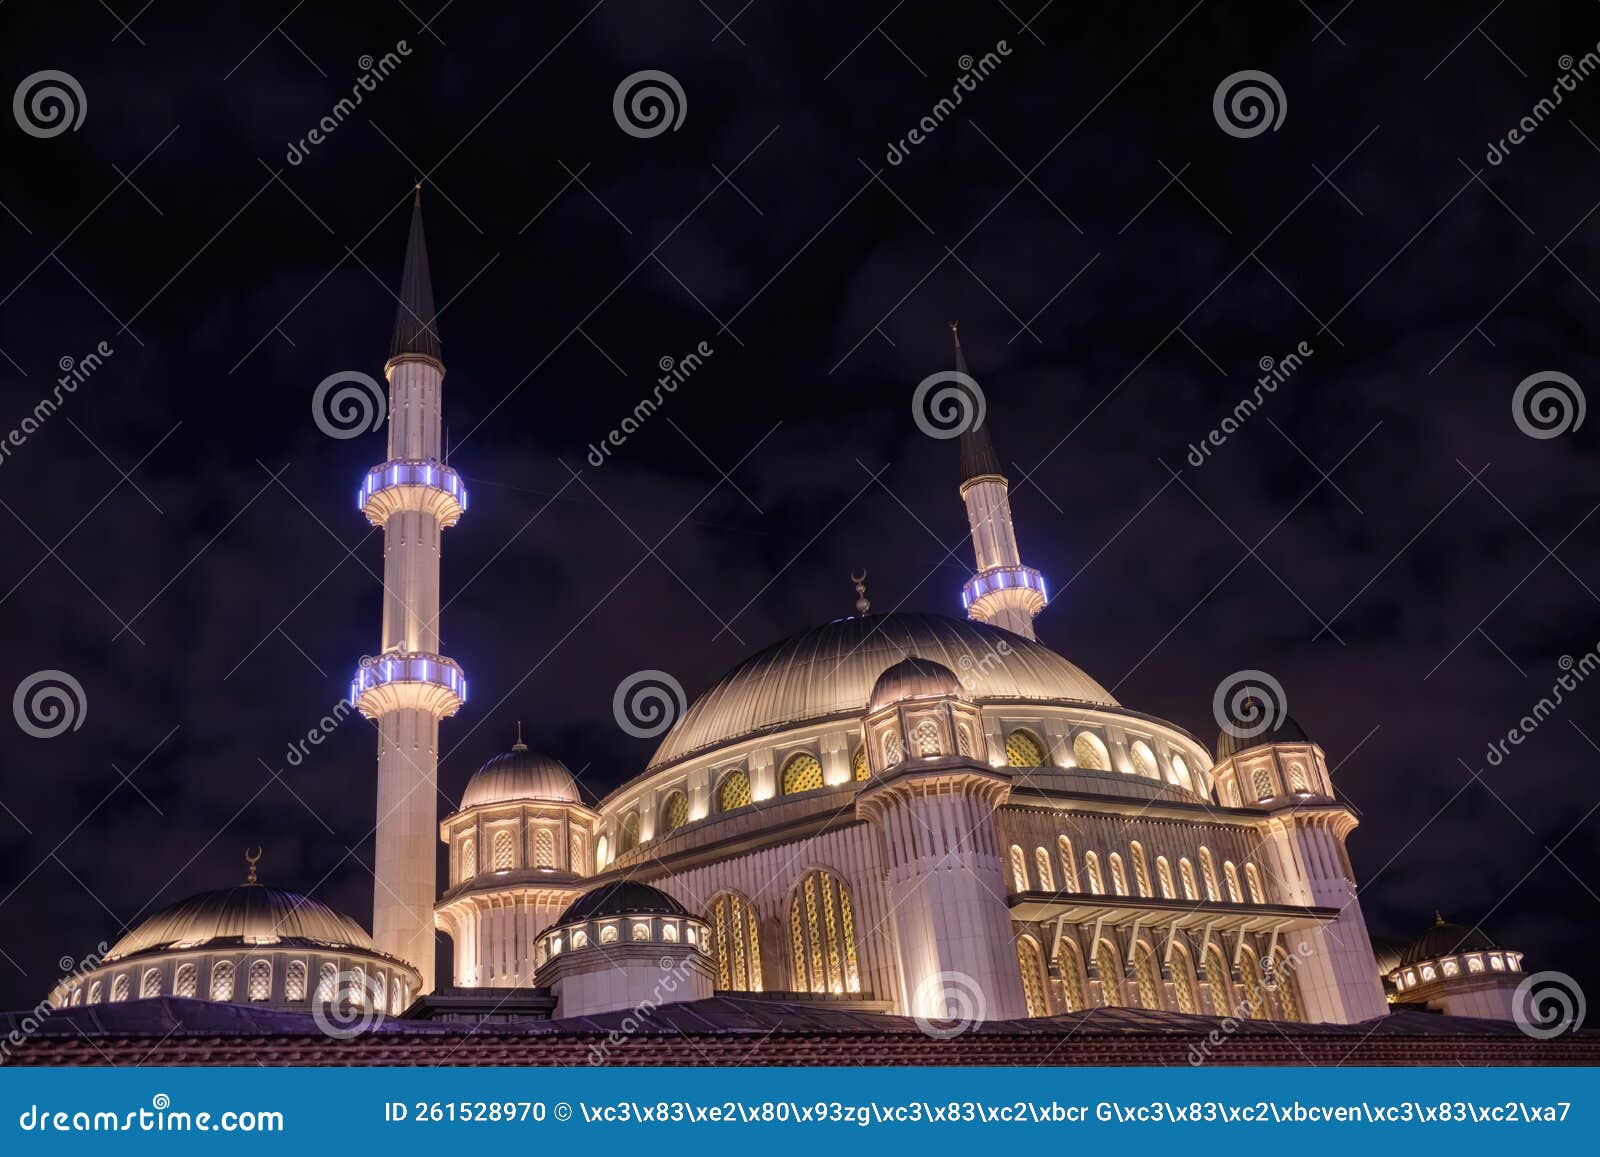 taksim mosque at night, istanbul, turkey